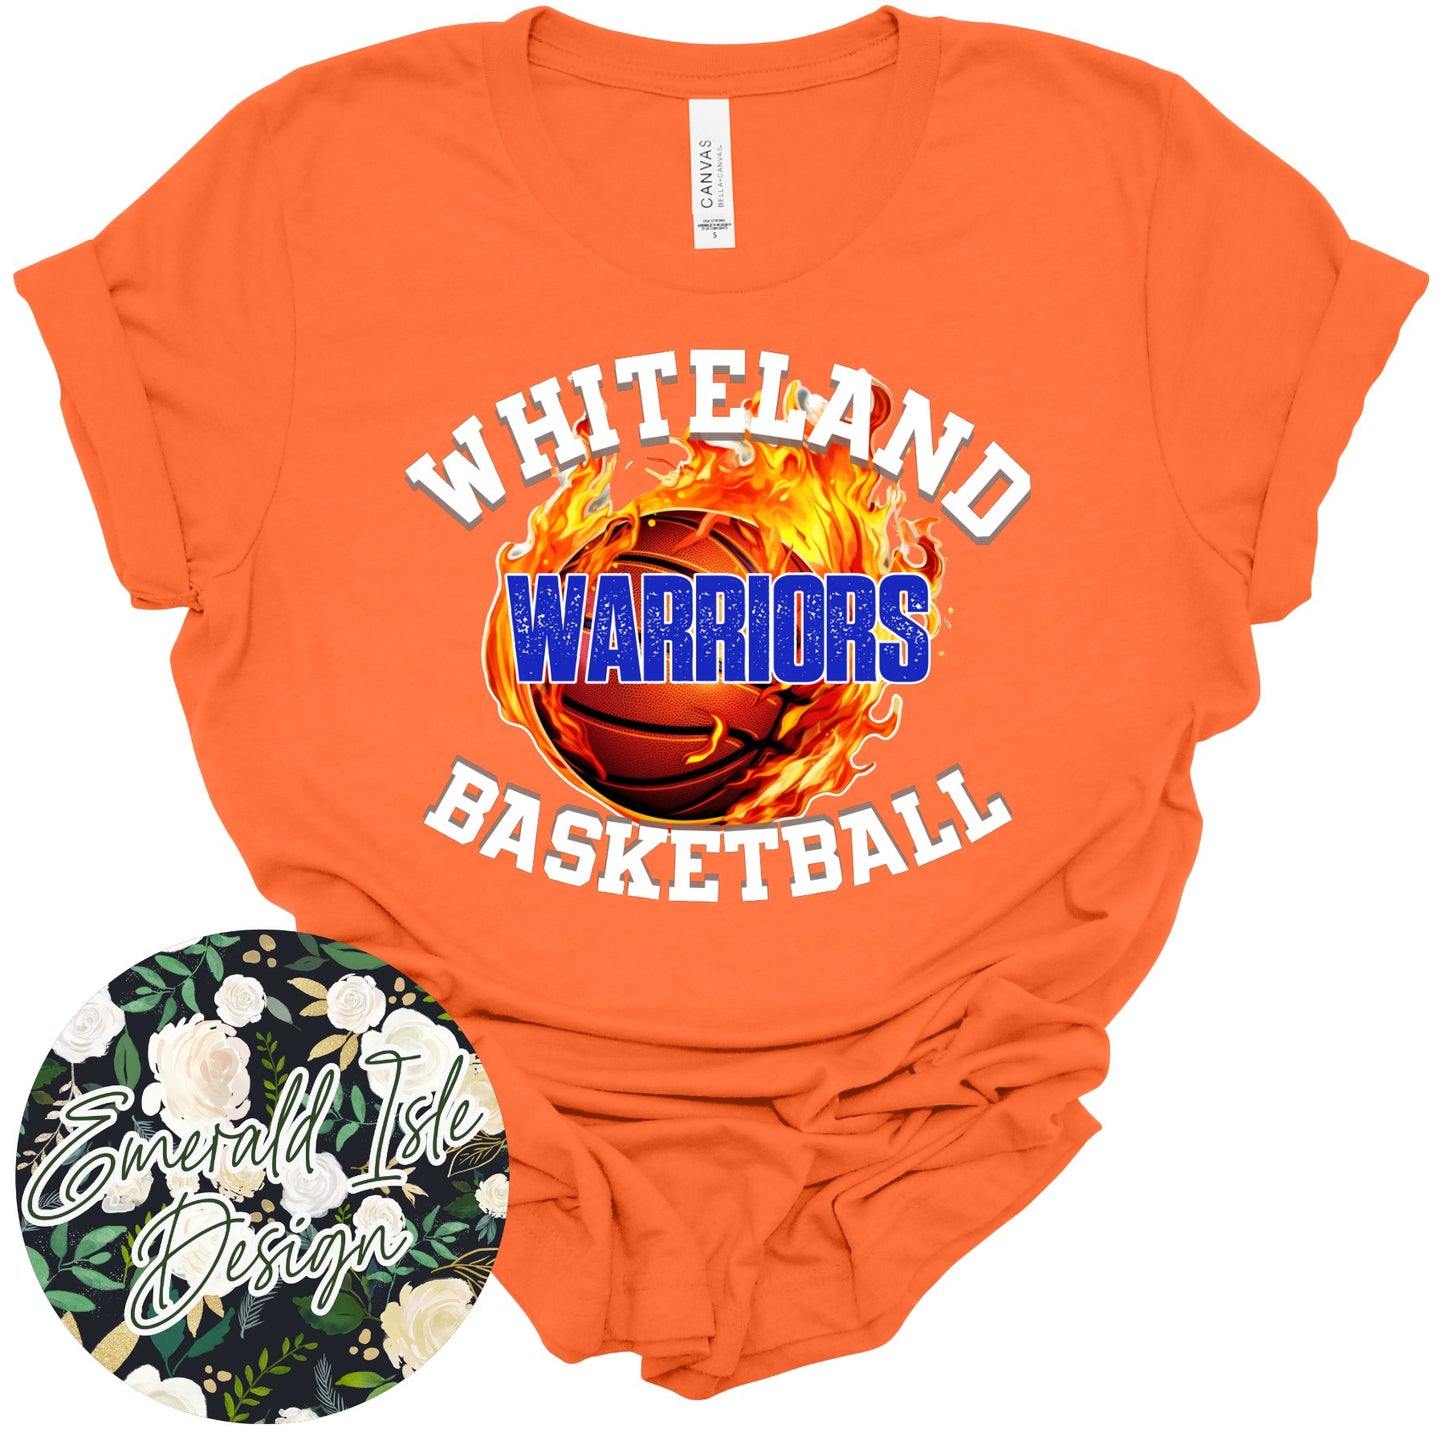 Whiteland Warriors Fire Basketball Design